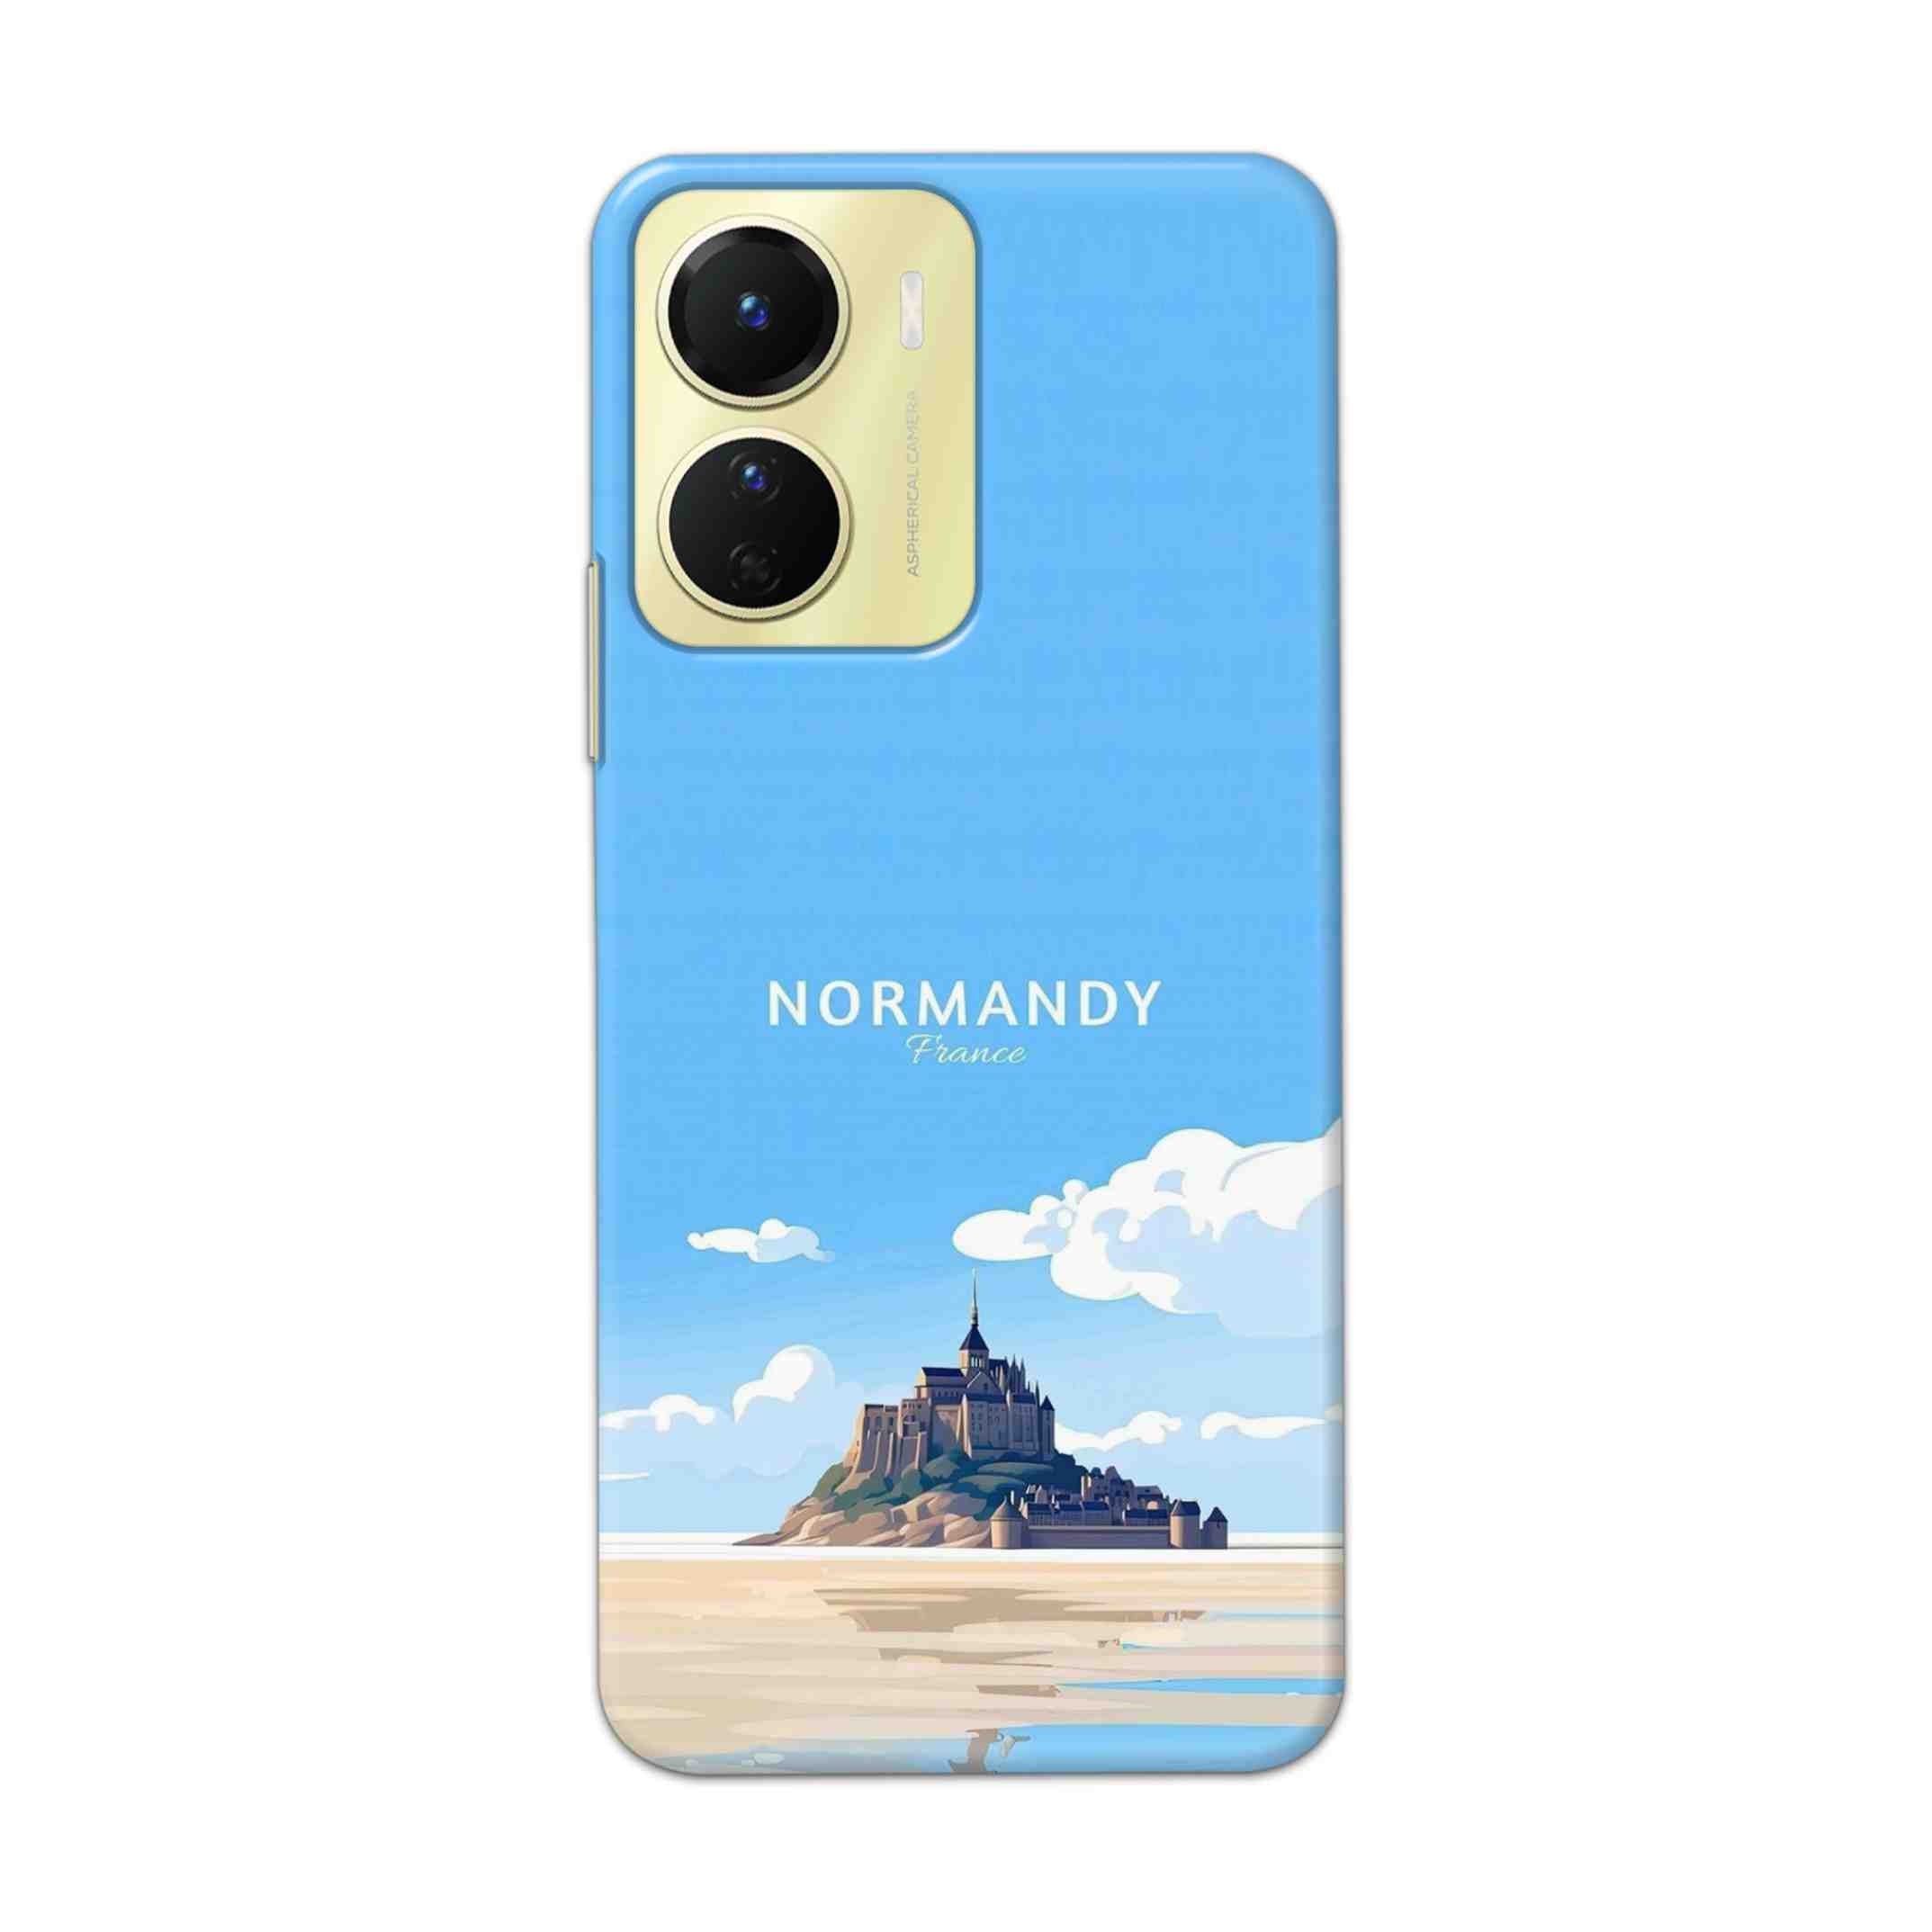 Buy Normandy Hard Back Mobile Phone Case Cover For Vivo Y16 Online